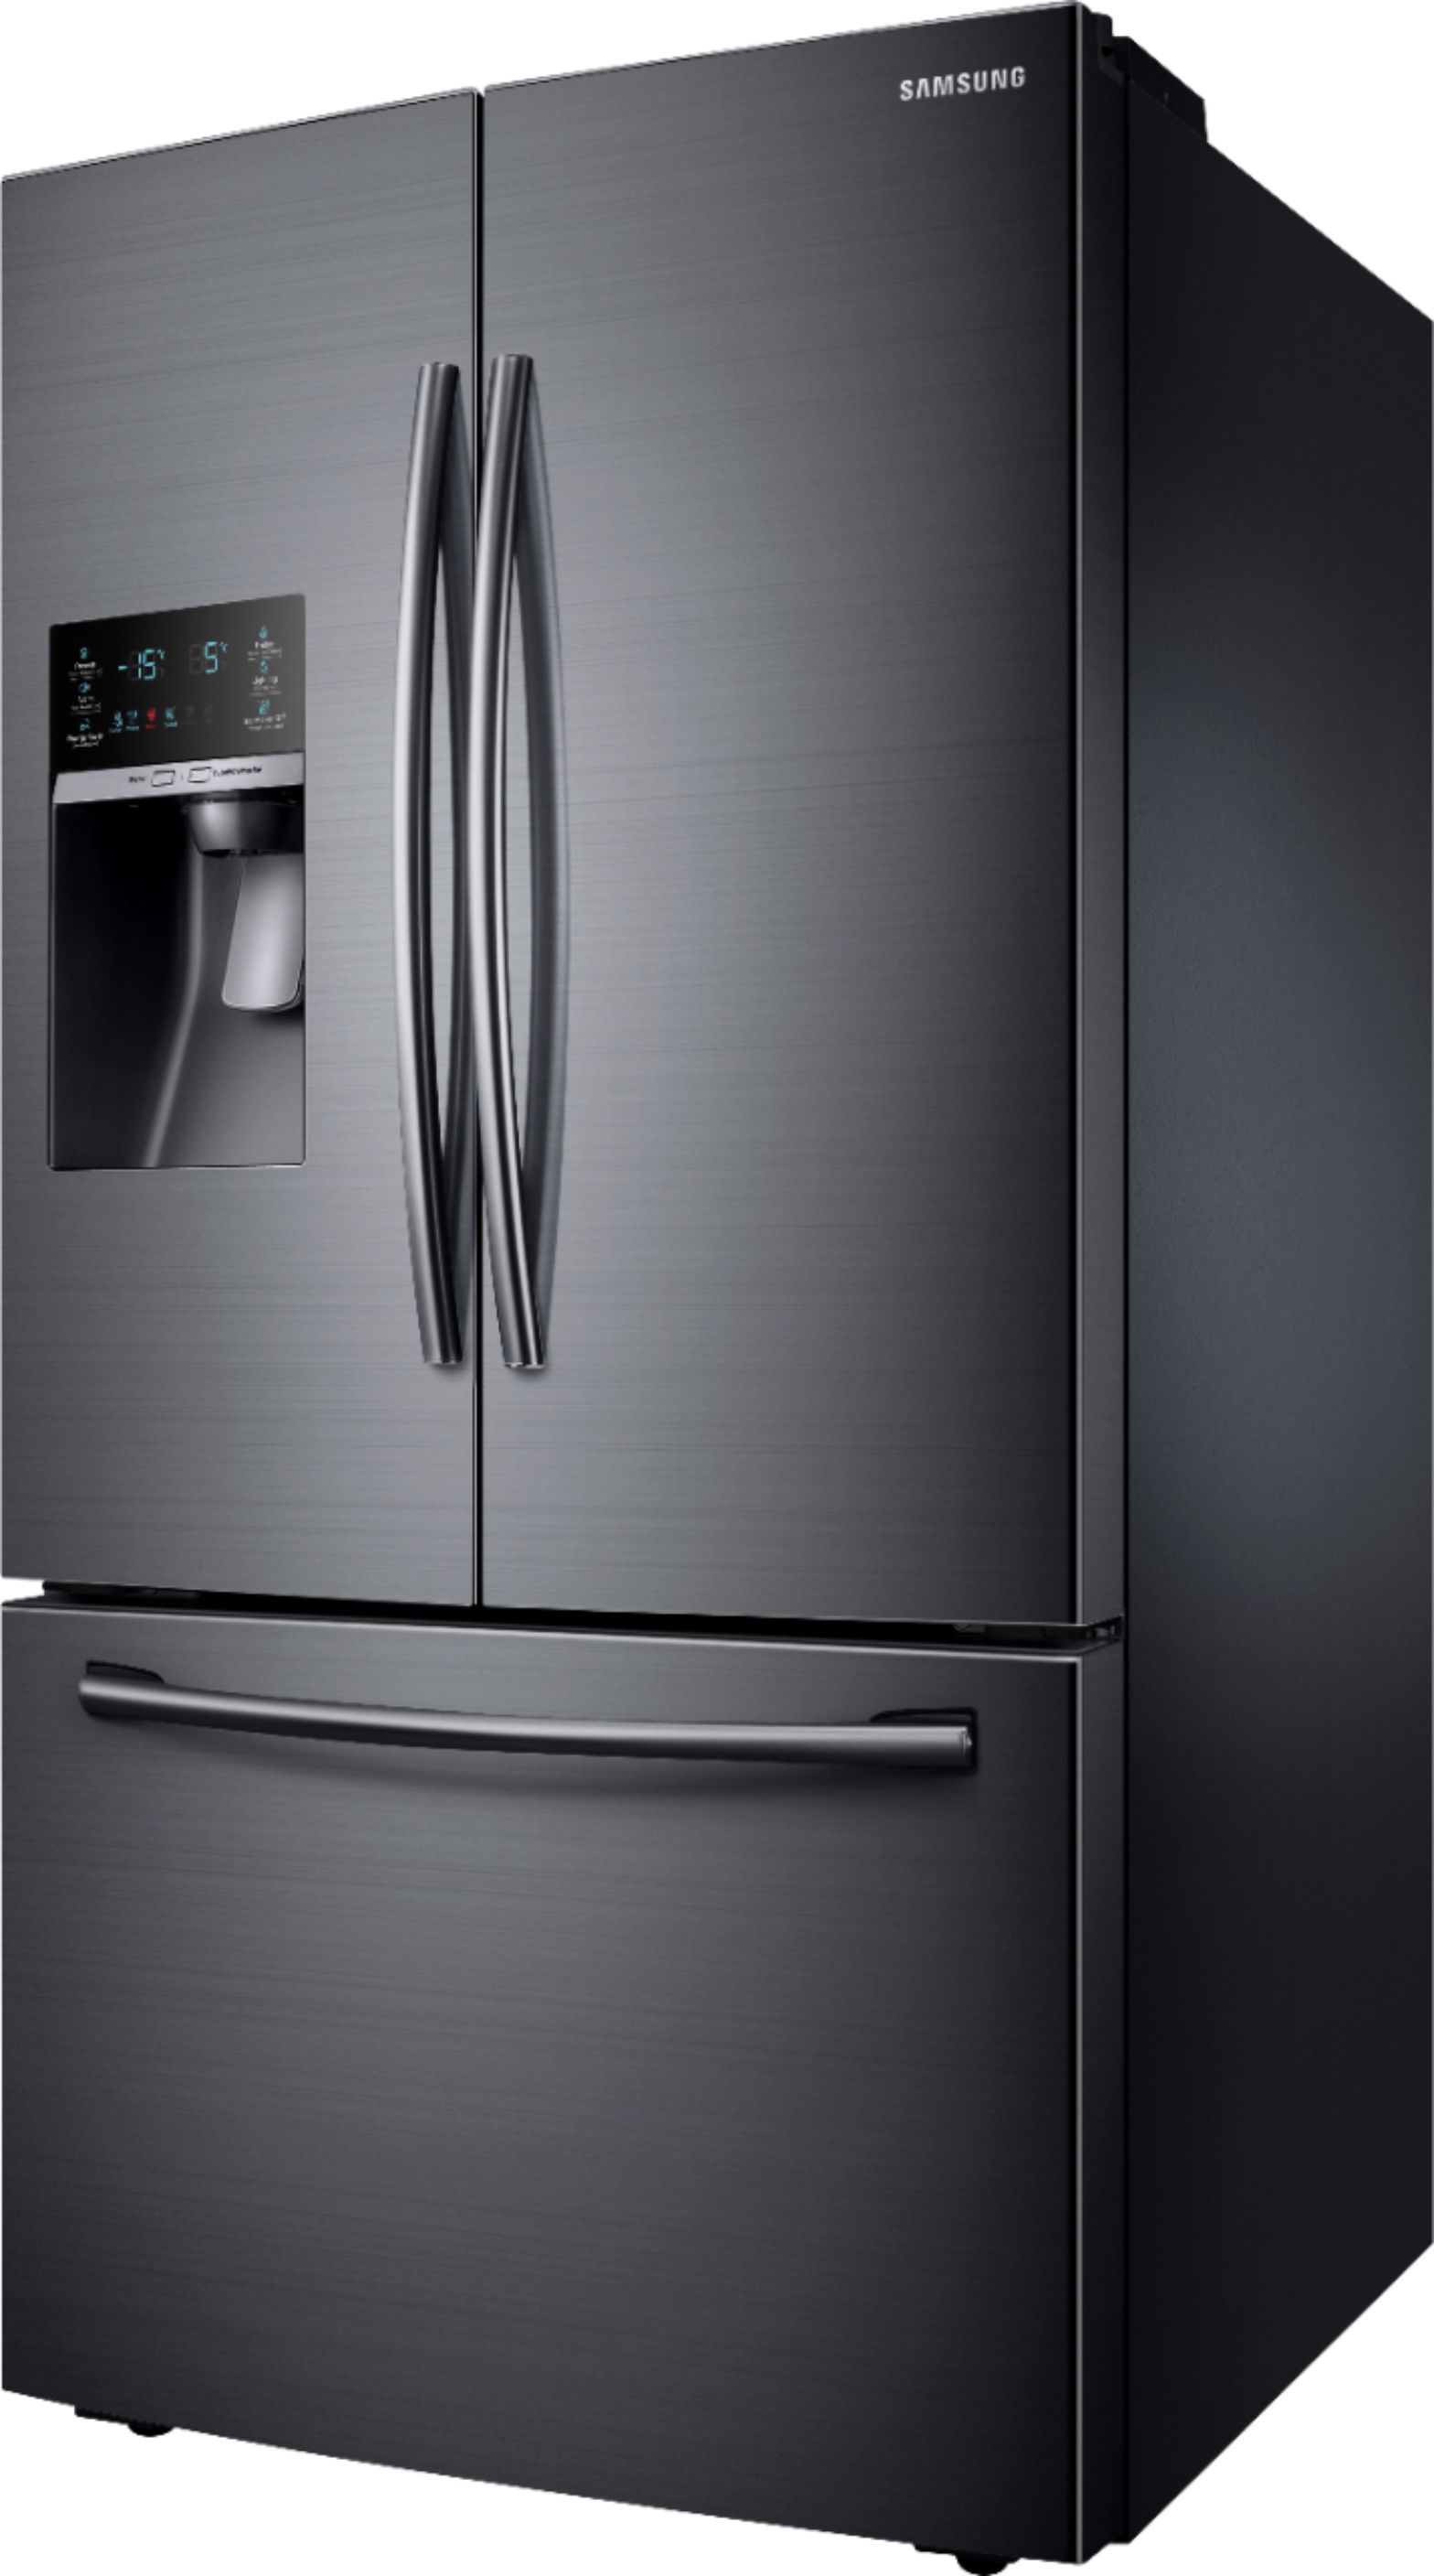 Best Buy: Samsung 22.5 cu. ft. Counter Depth French Door Fingerprint Best Buy Samsung Black Stainless Steel Refrigerator